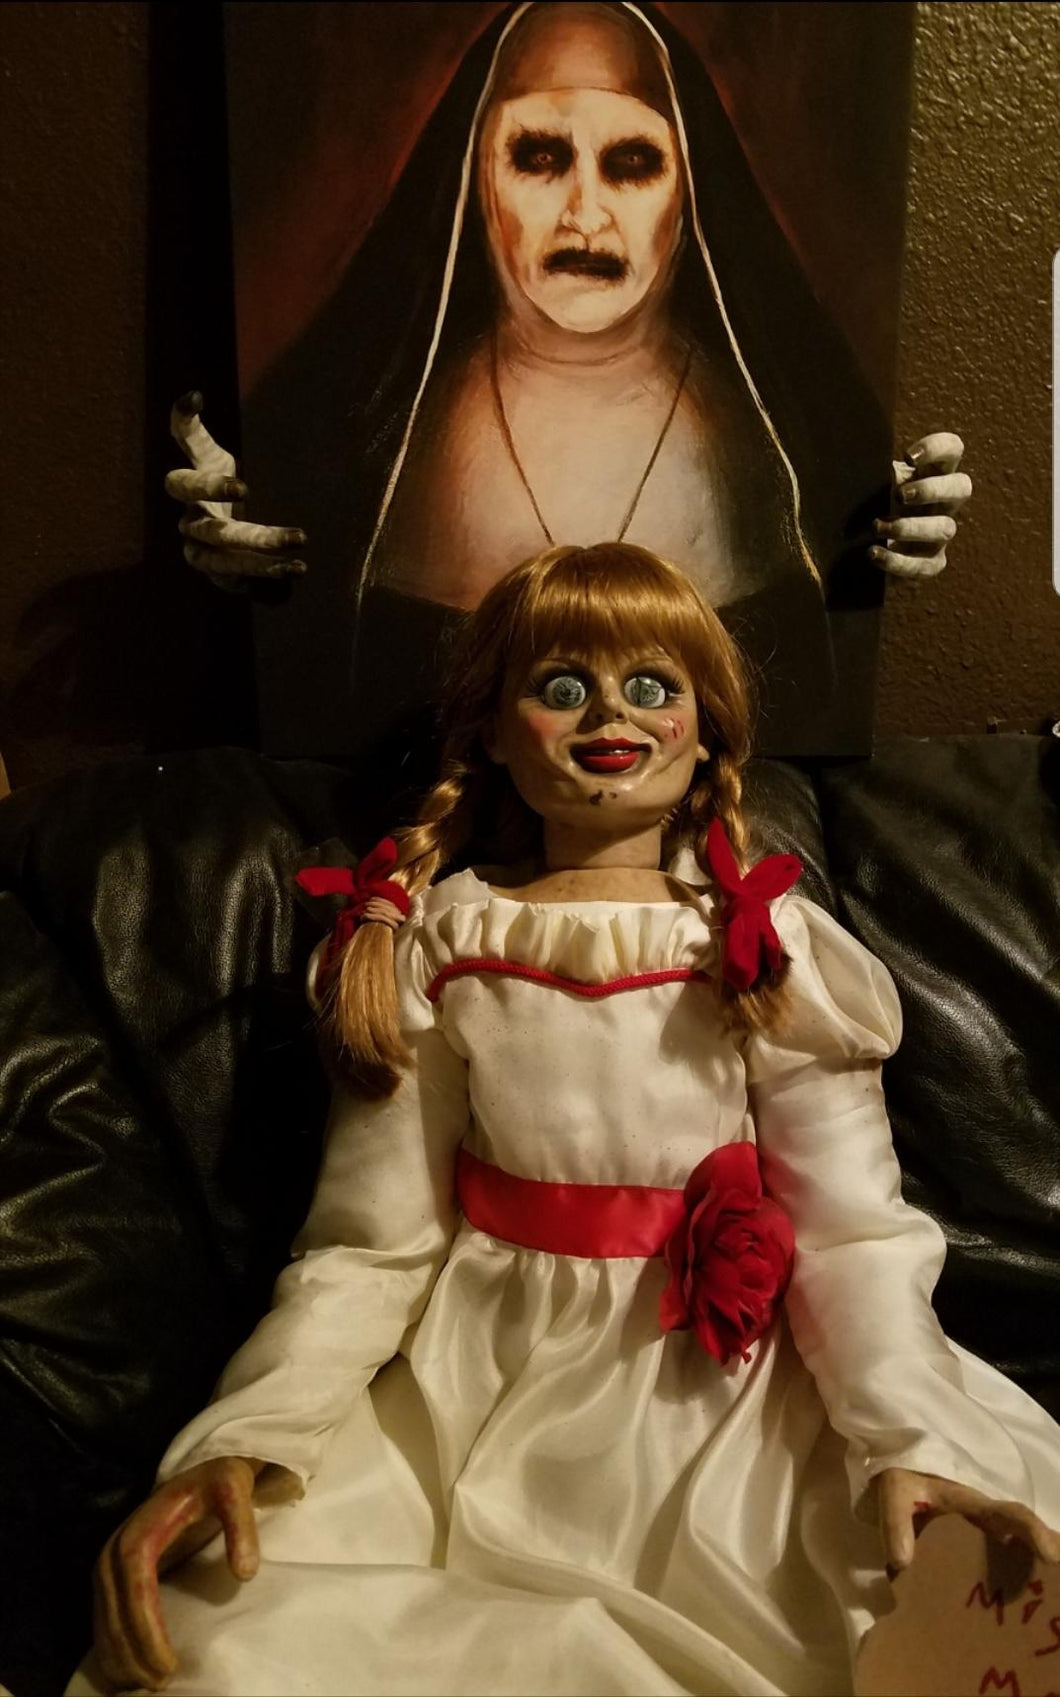 How Do You Make a Scary-Movie Doll?